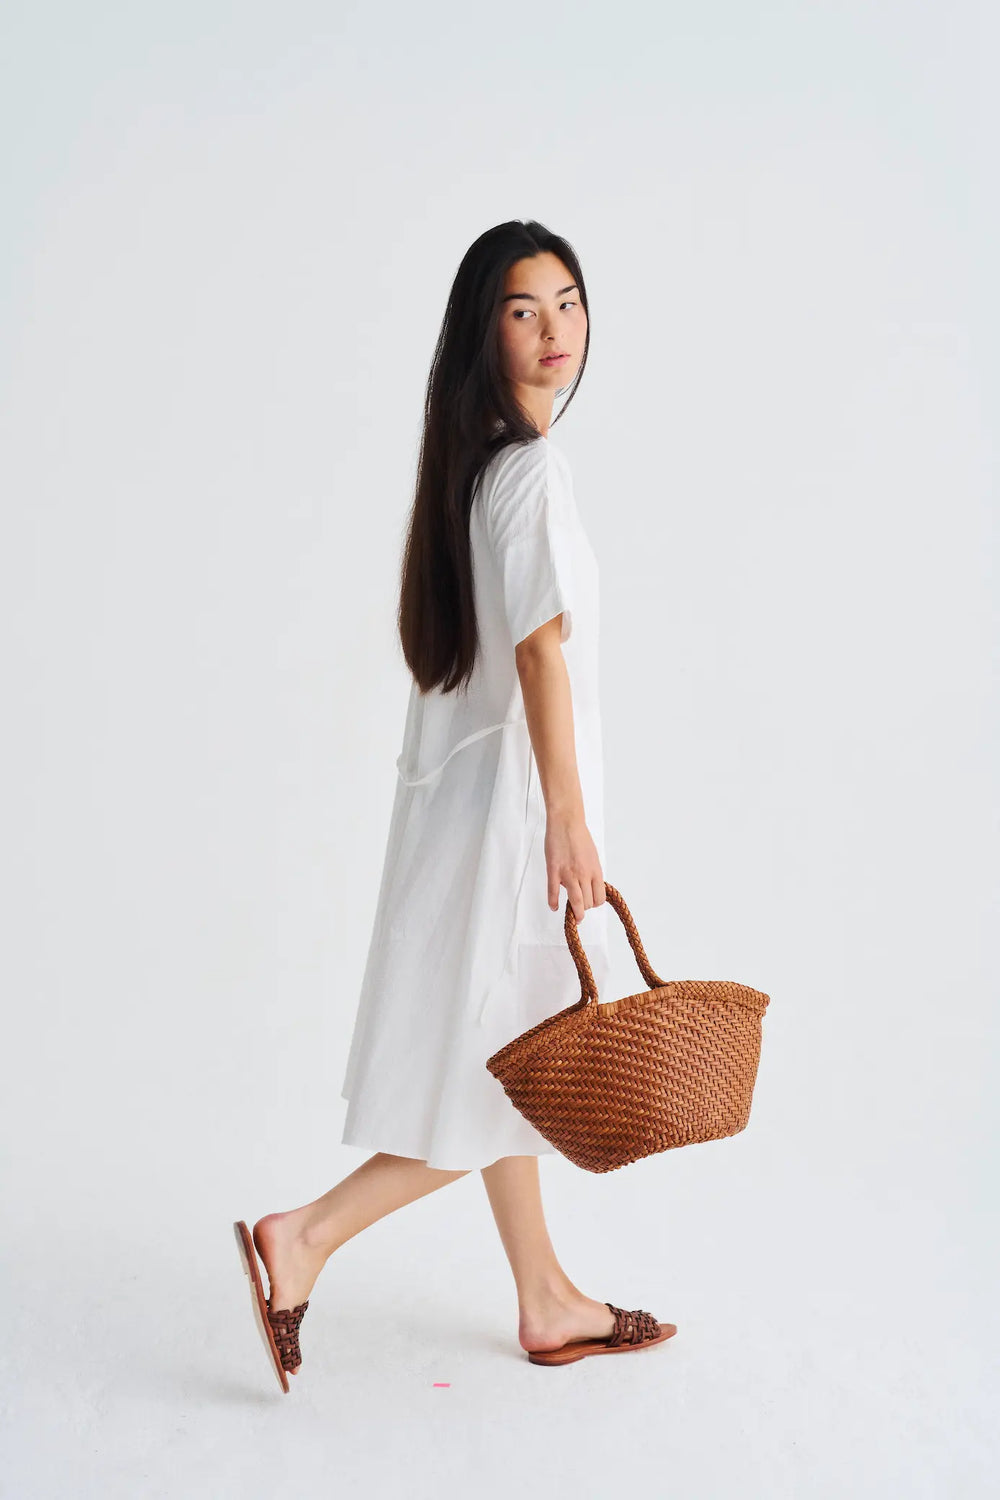 Dragon Diffusion - Martha Tan - Woven Leather Bag Handmade